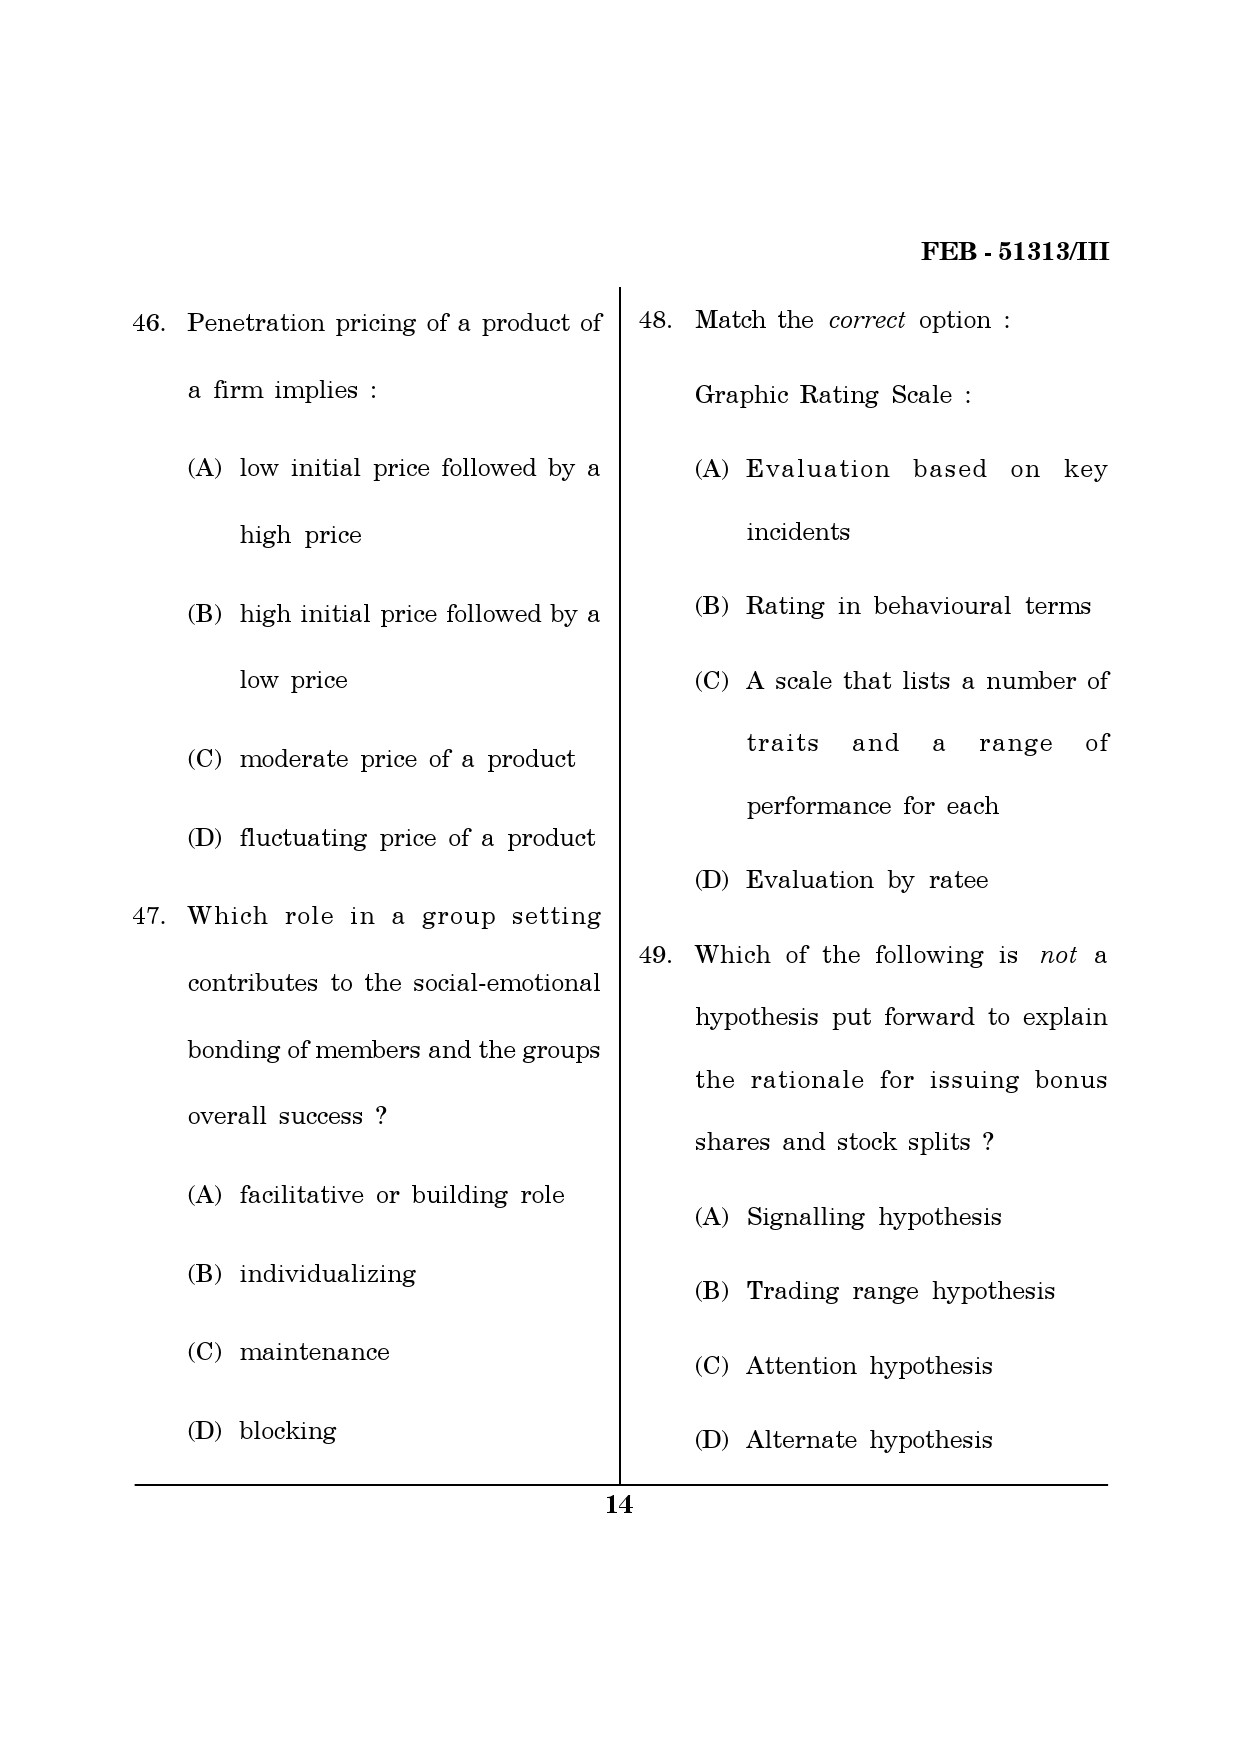 Maharashtra SET Management Question Paper III February 2013 14